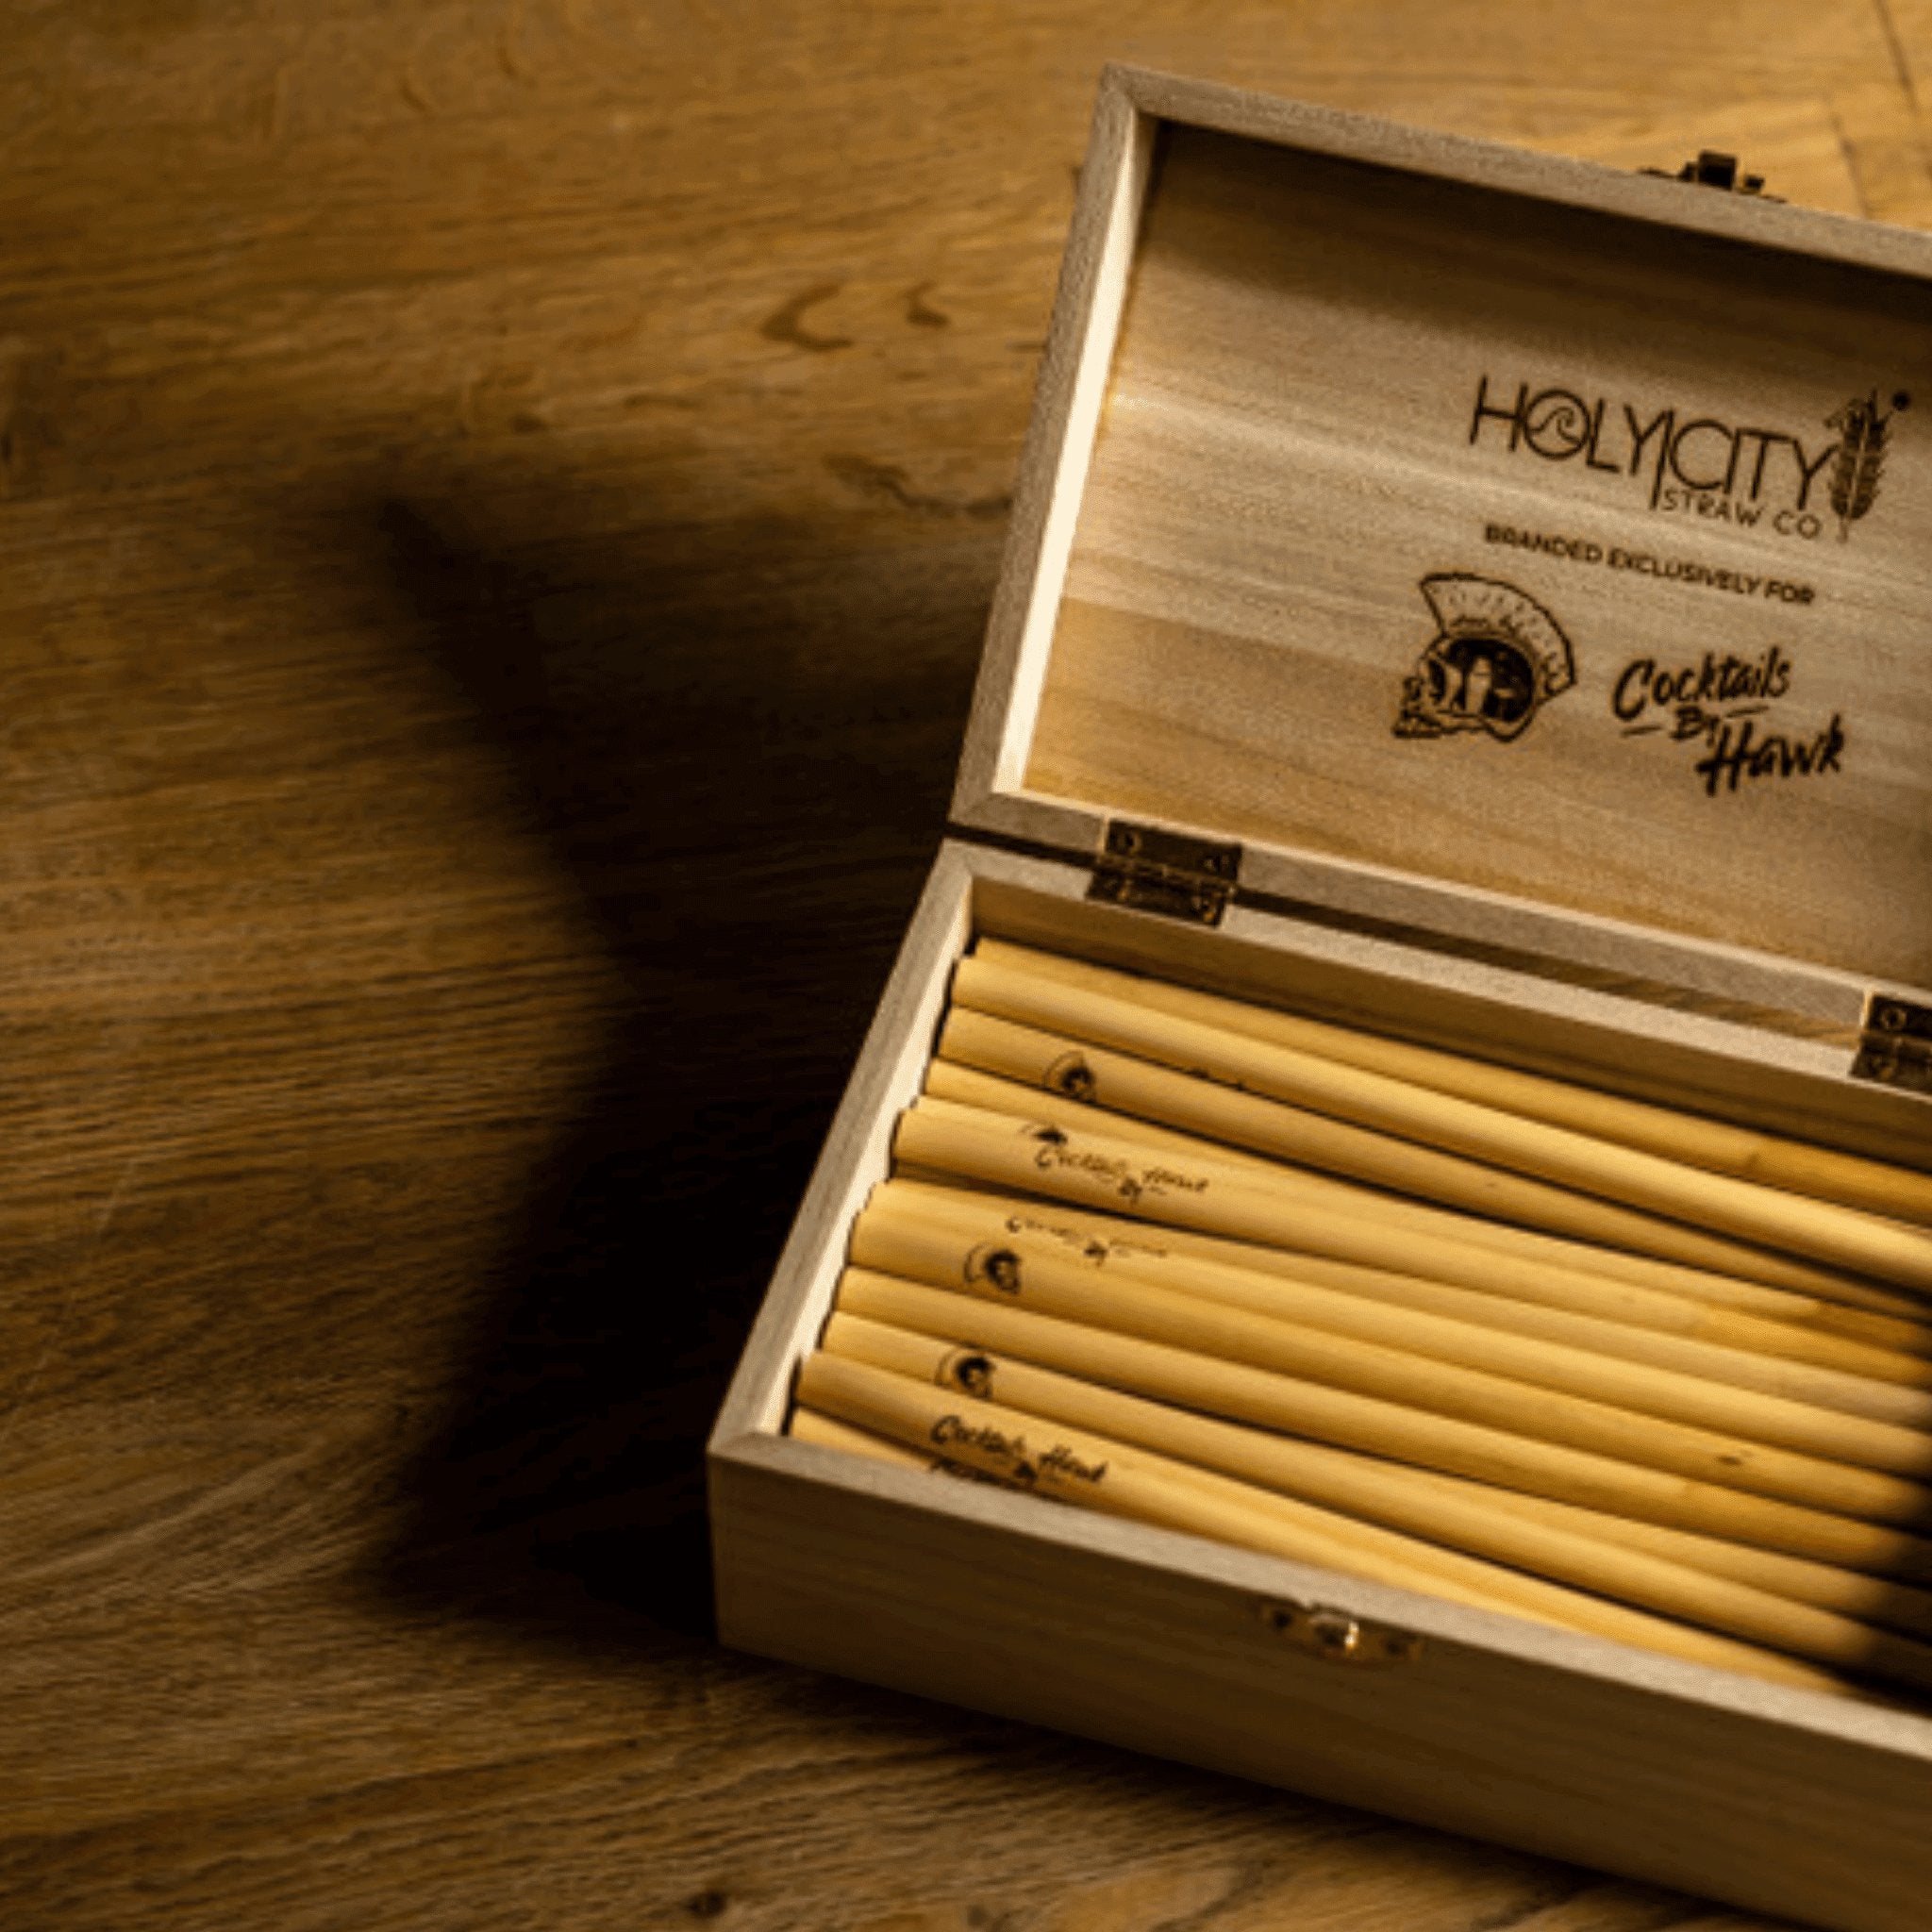 Holy City Straw Branded Straw Holder Box